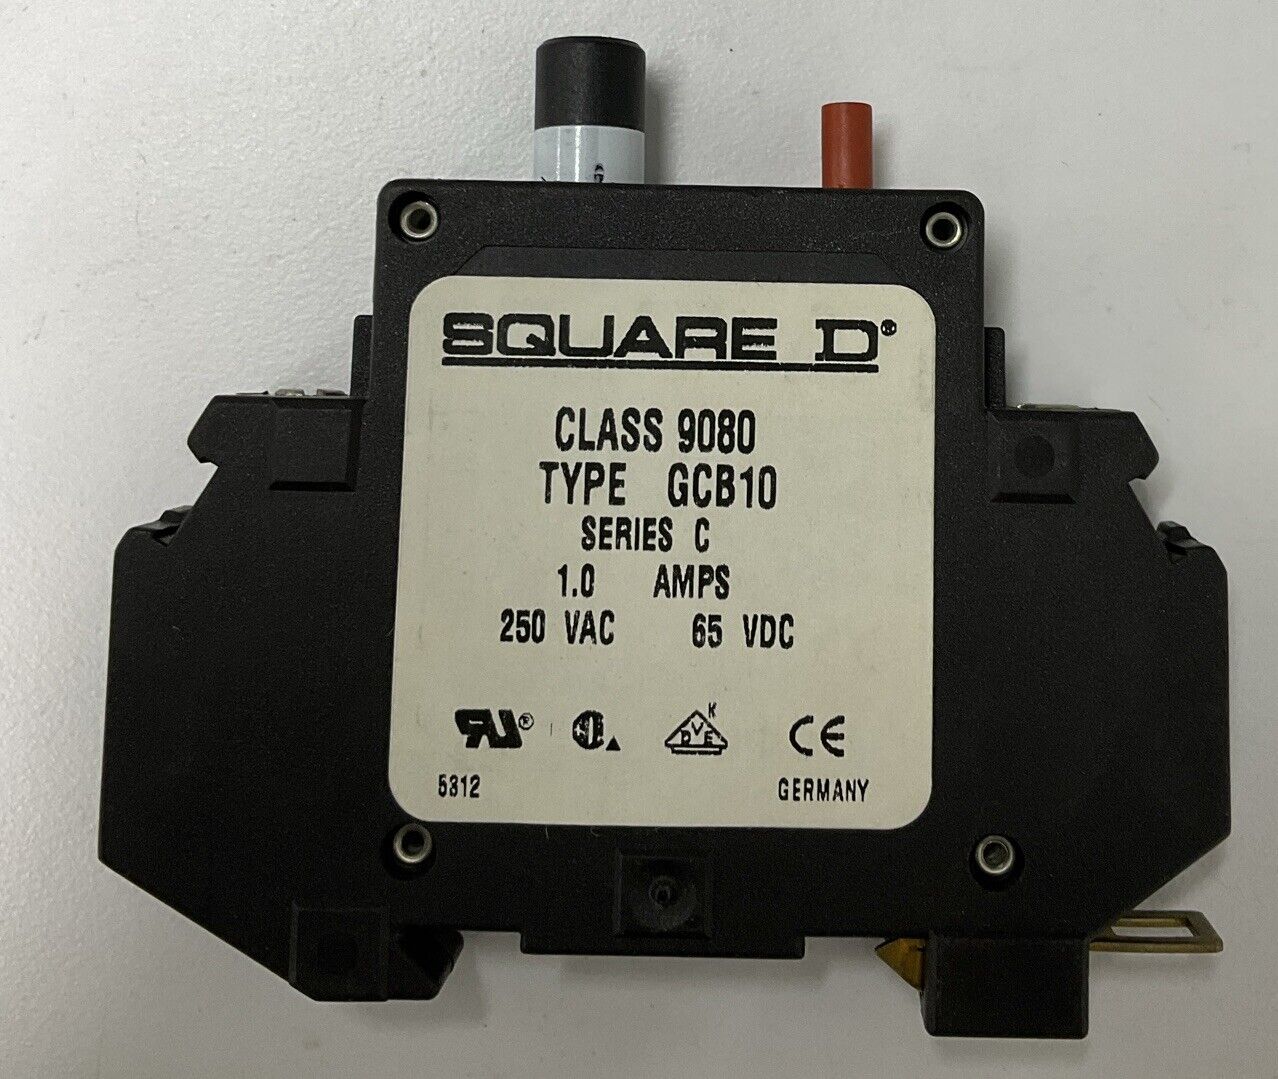 Square D 9080-GCB10 Series C 1.0 Amp Circuit Breaker 250VAC (CL302)